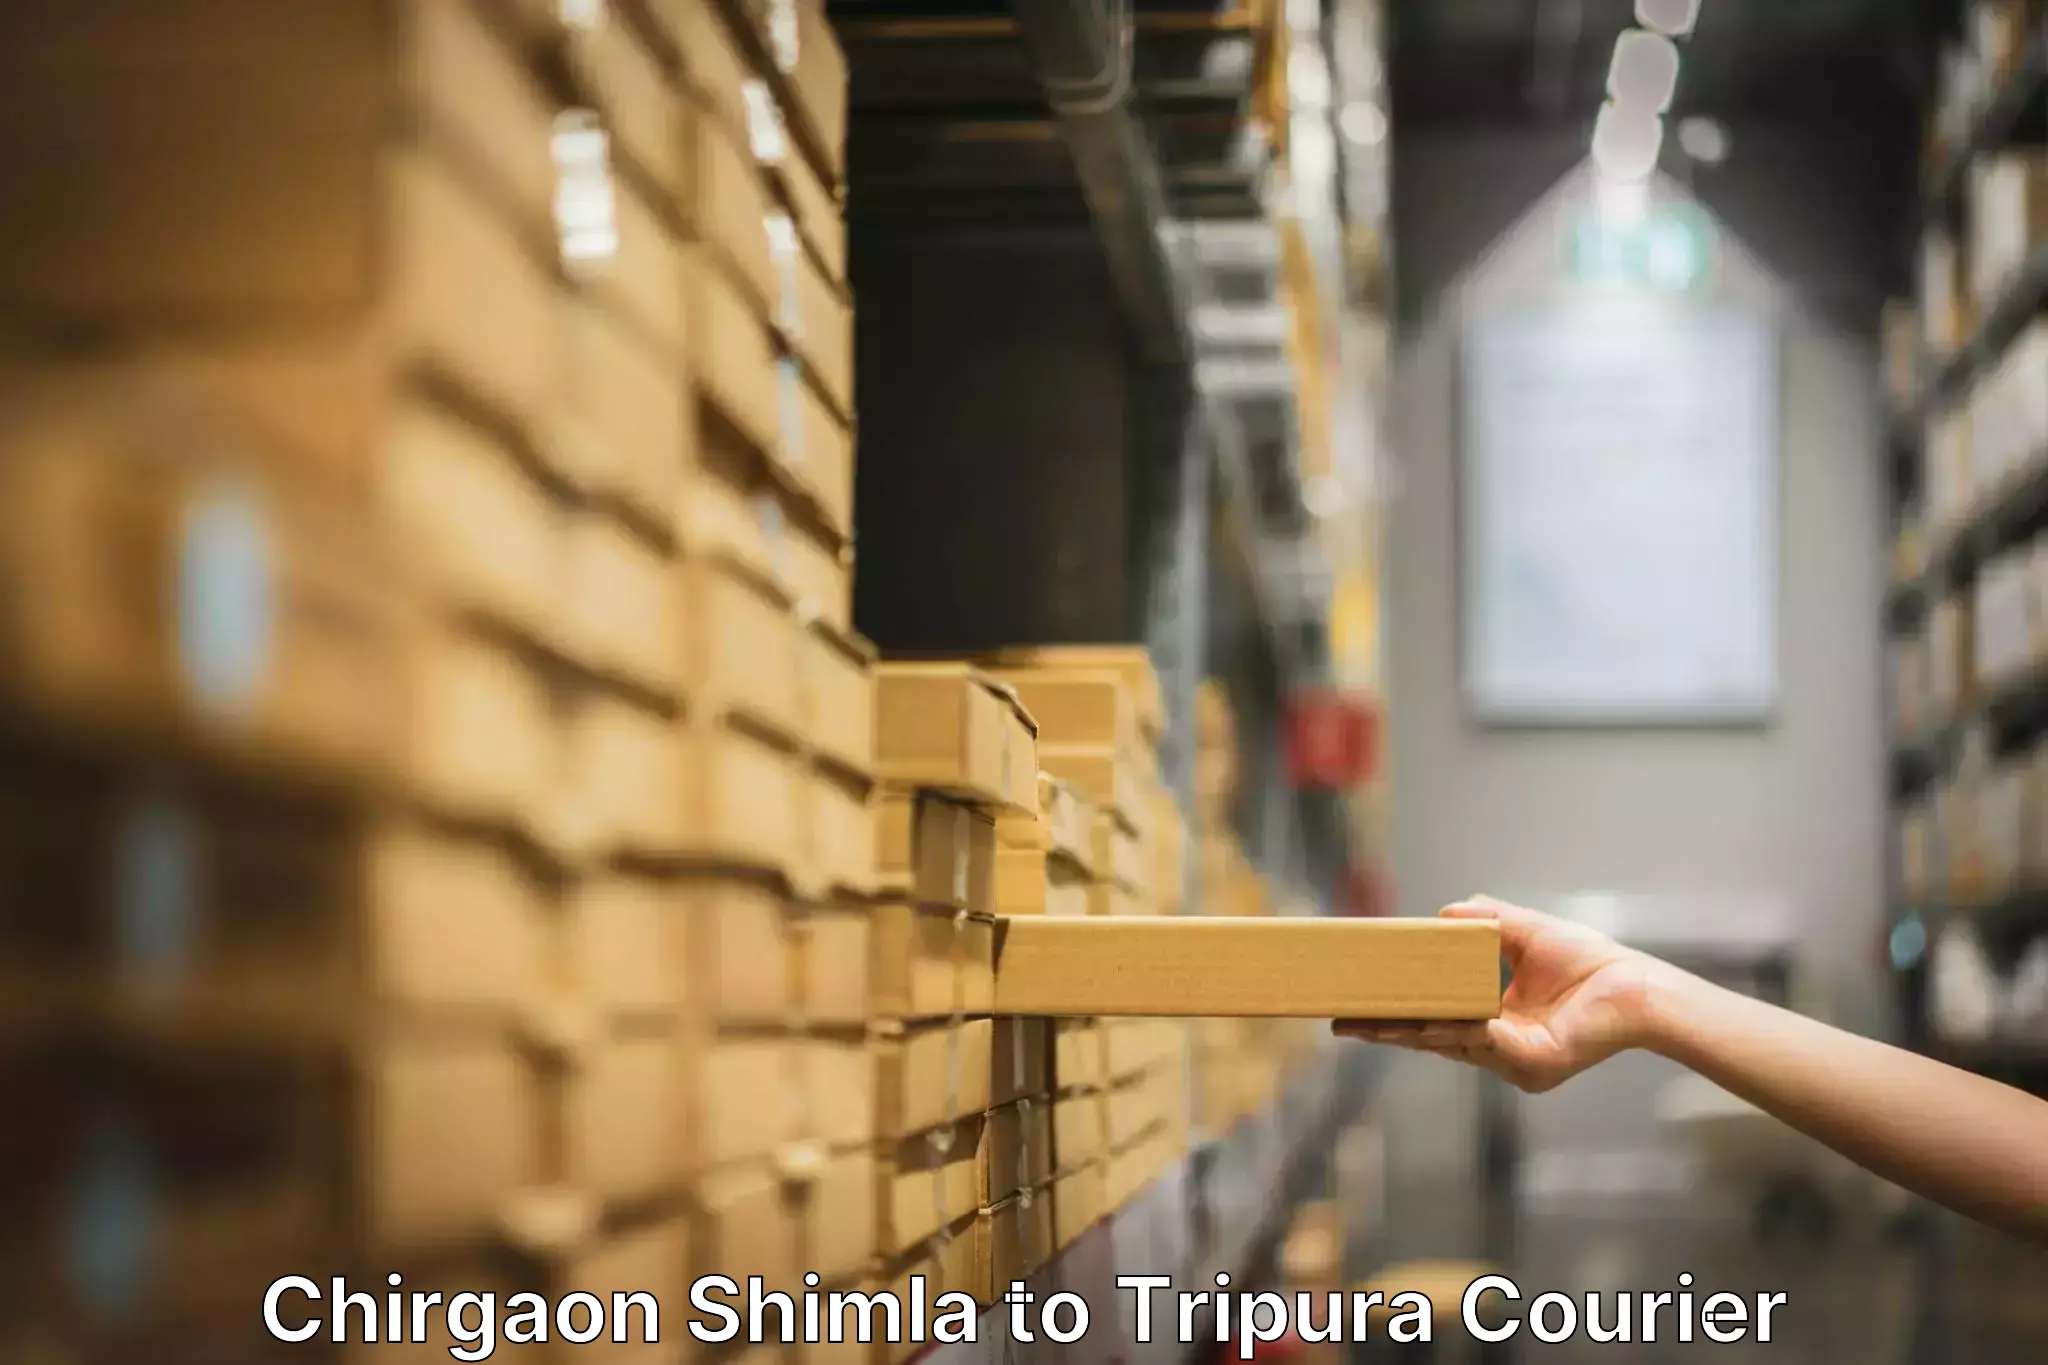 Quality moving and storage Chirgaon Shimla to Tripura